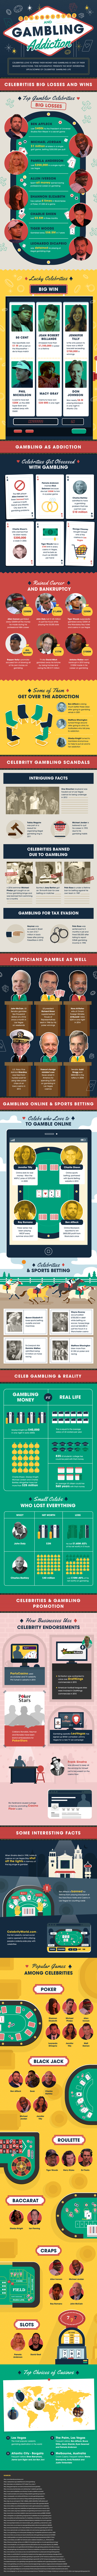 gambling infographic celebrities who gamble